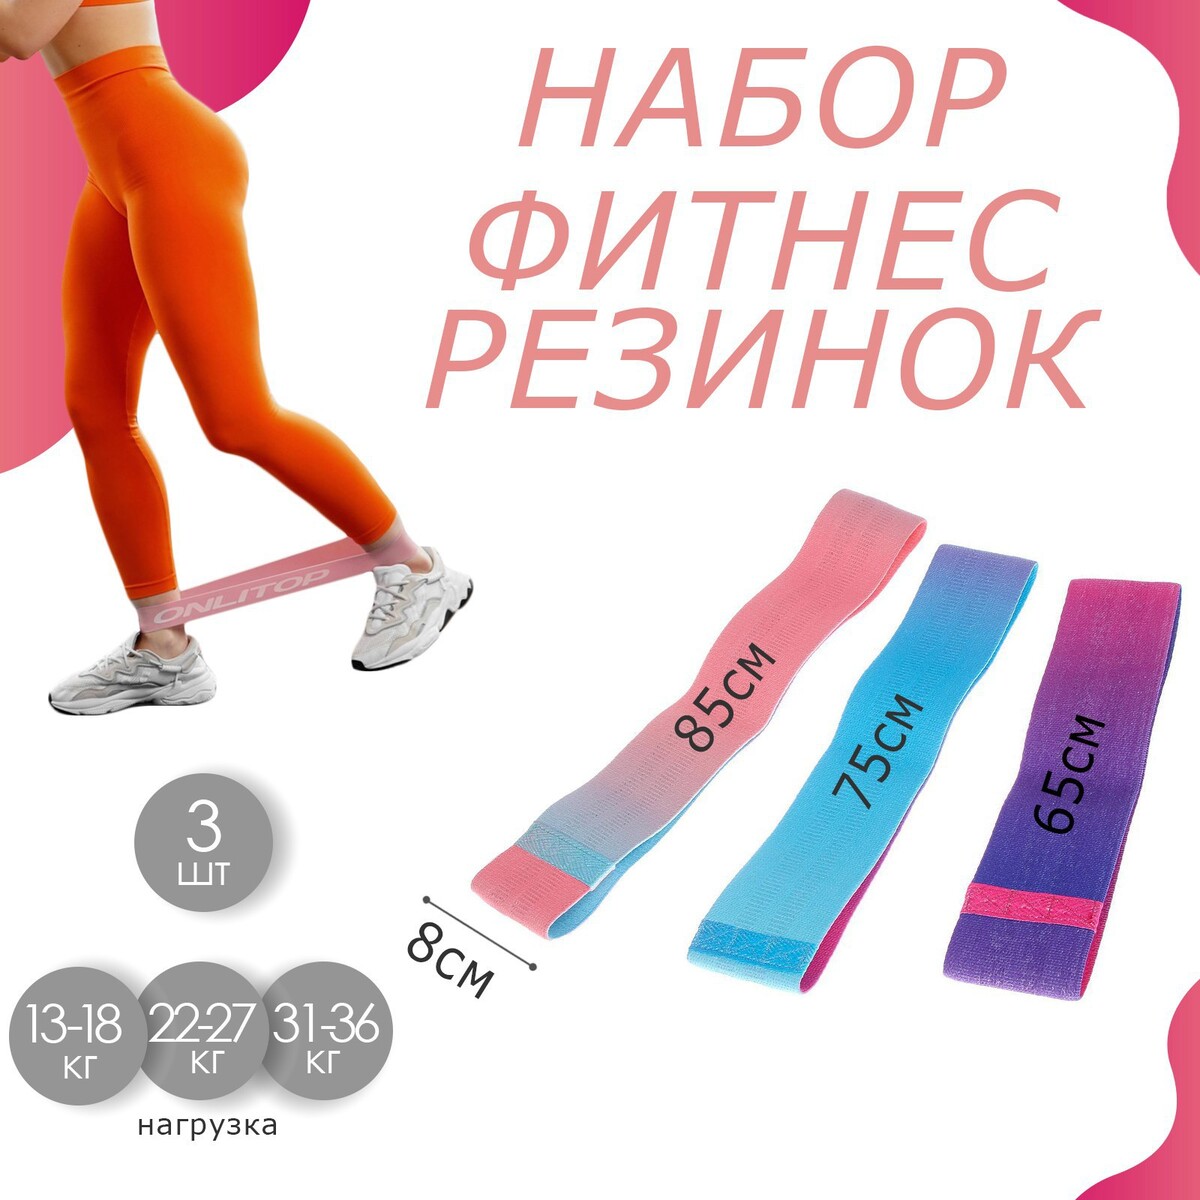 Набор фитнес-резинок: light, medium, heavy набор фитнес резинок onlitop light medium heavy